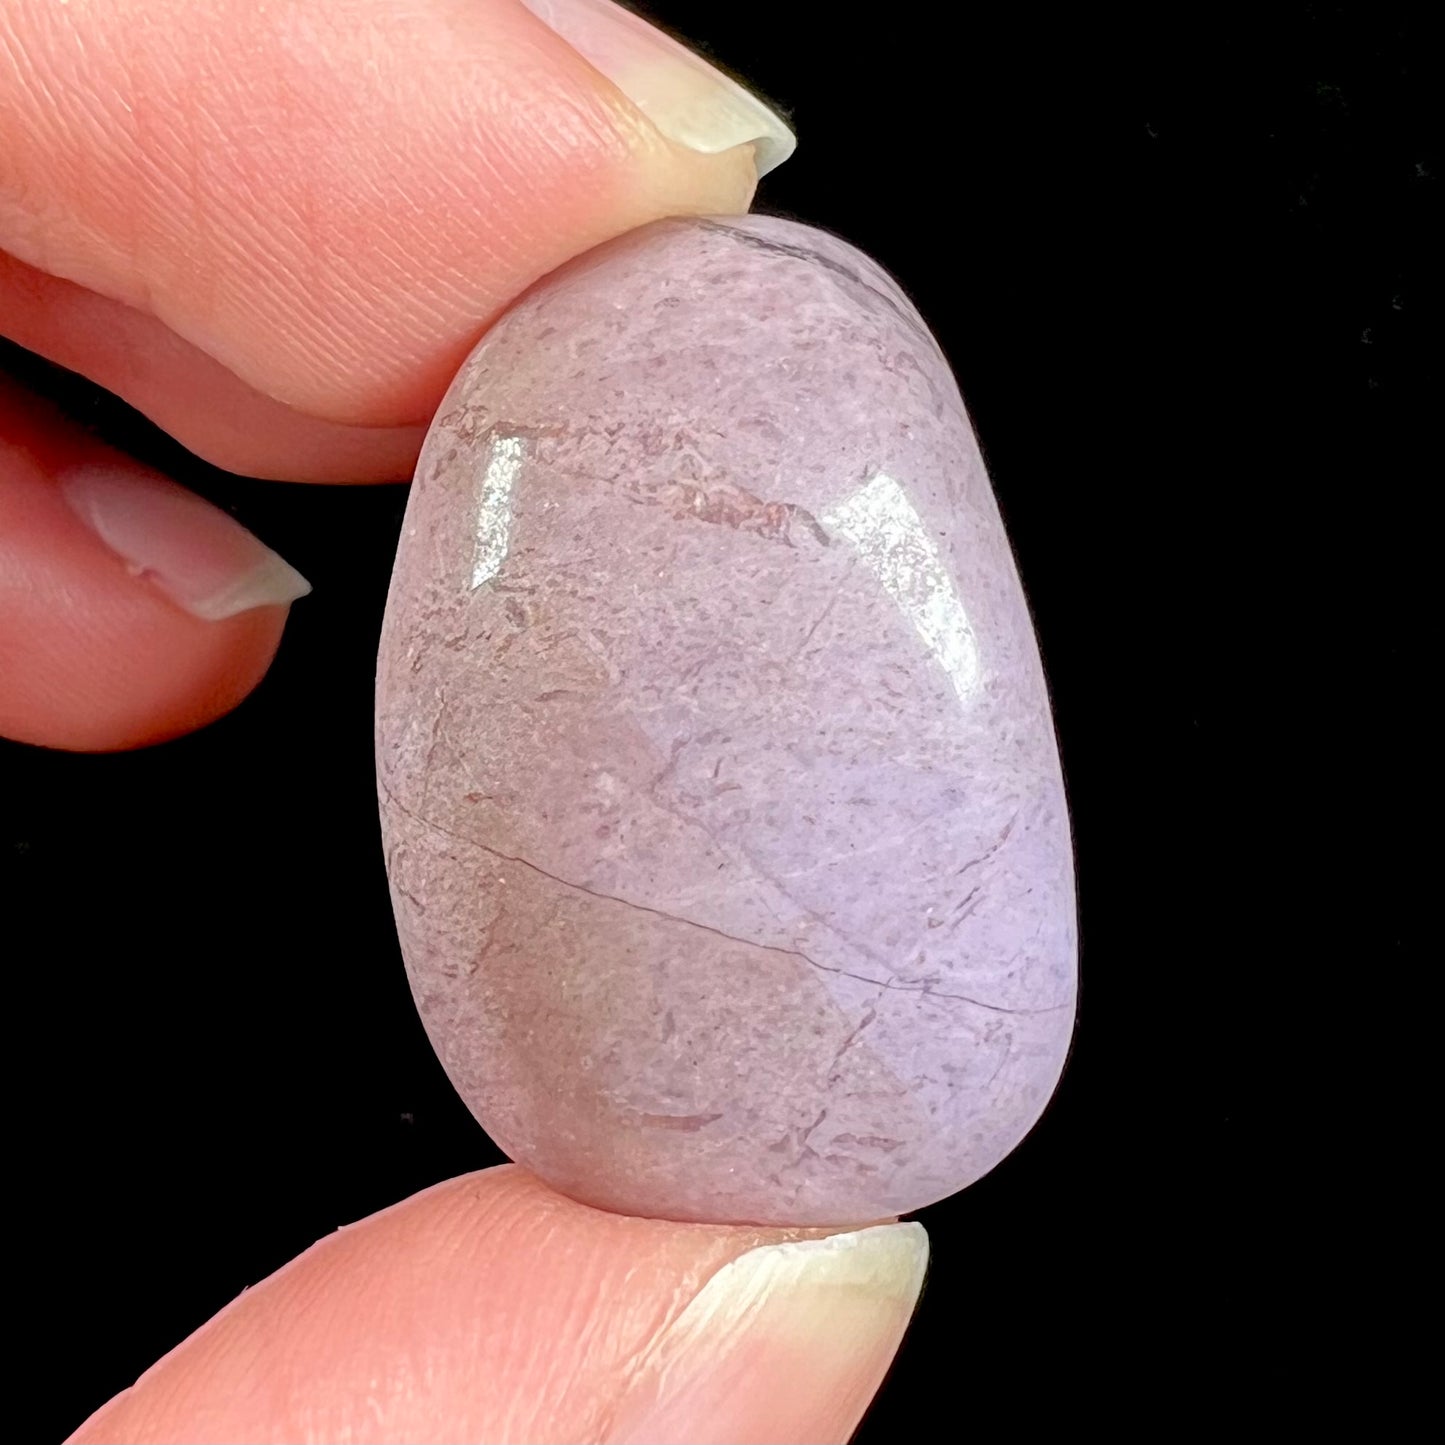 A tumble polished turkiyenite purple jade stone from Bursa, Turkey.